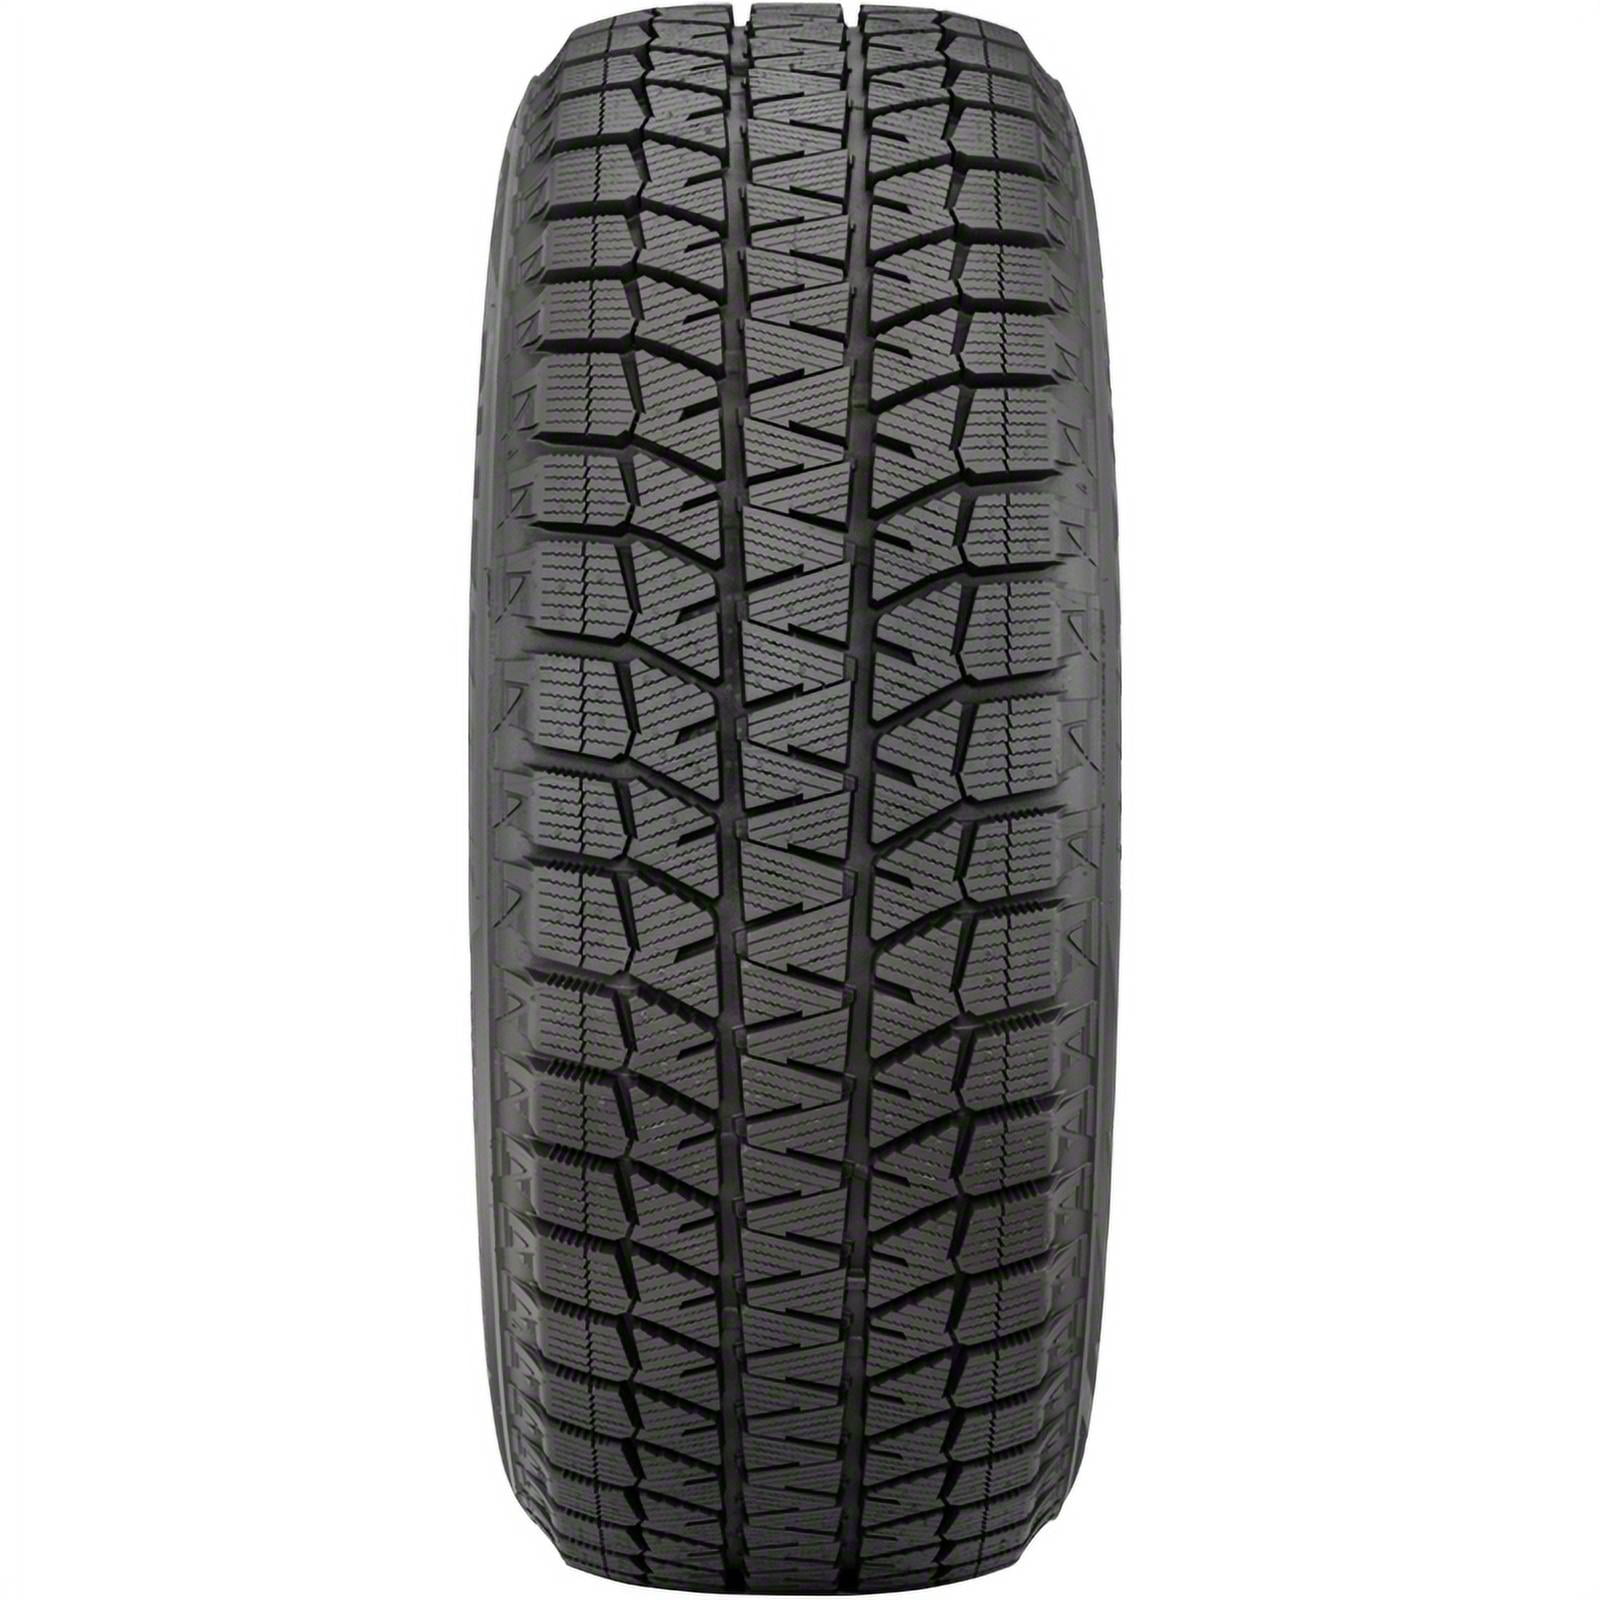 Bridgestone Blizzak WS80 Winter Radial Tire 225/50R17 94H 